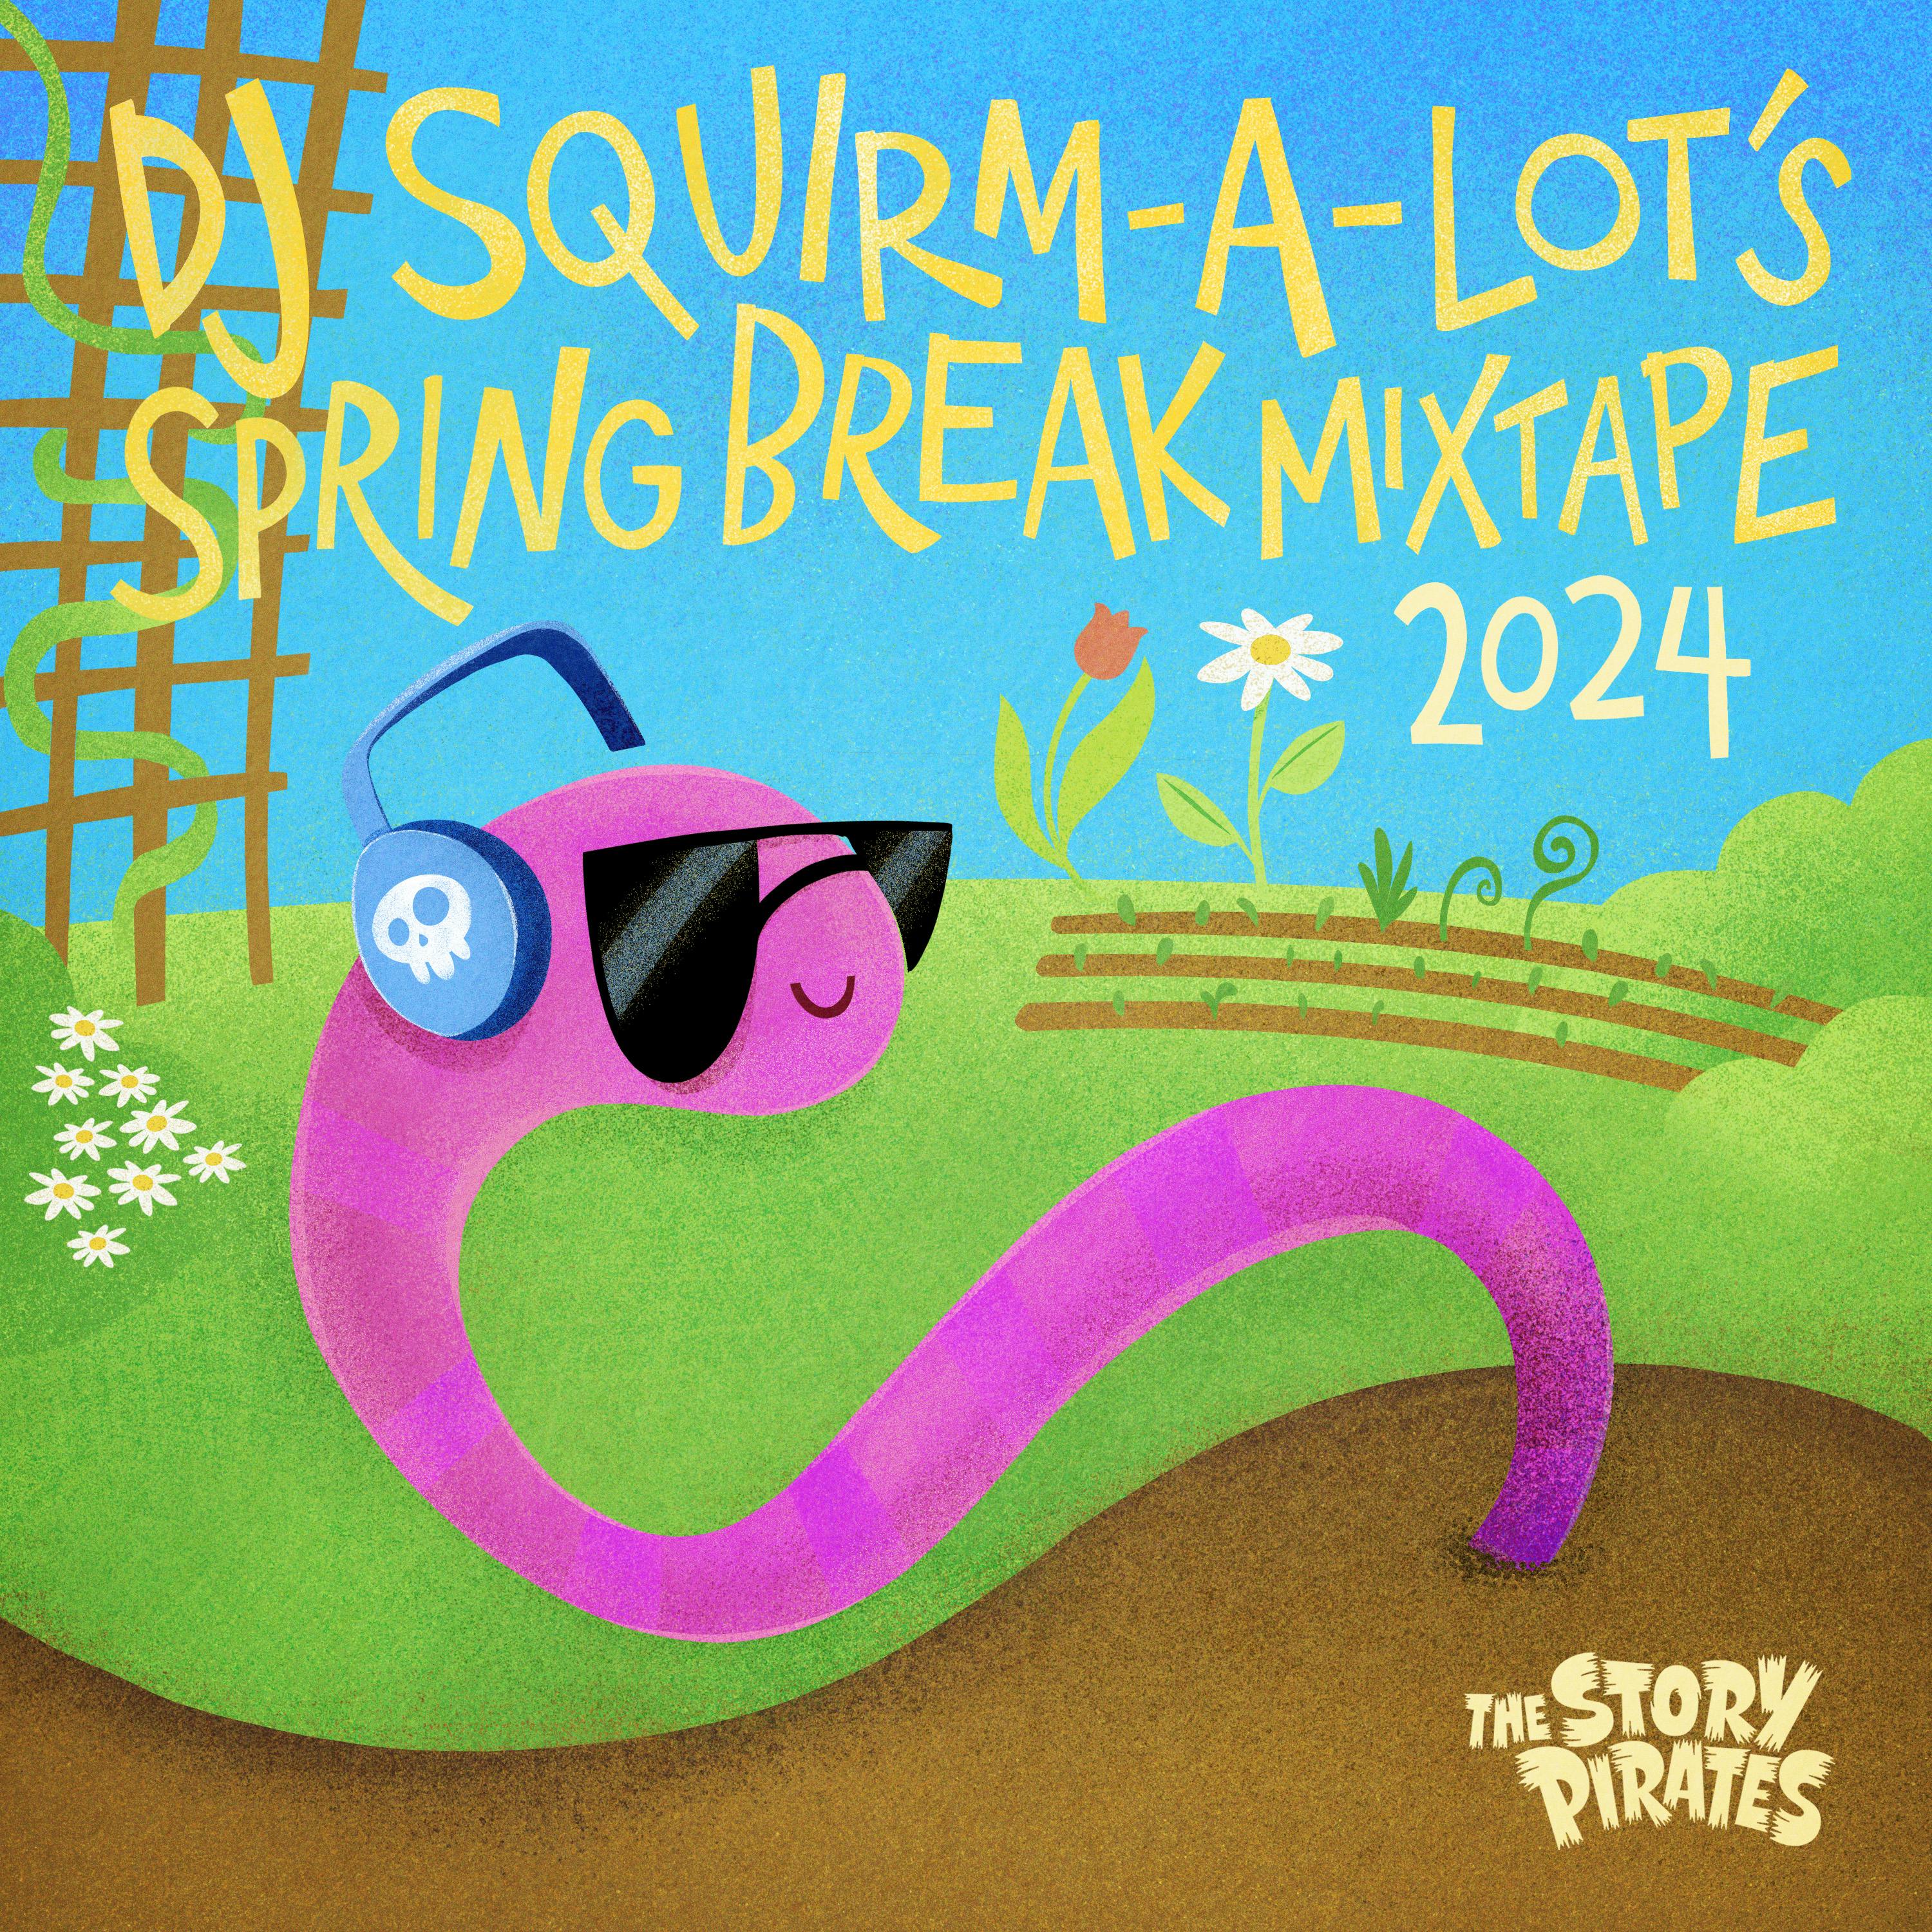 DJ Squirm-a-Lot’s Spring Break Mixtape 2024